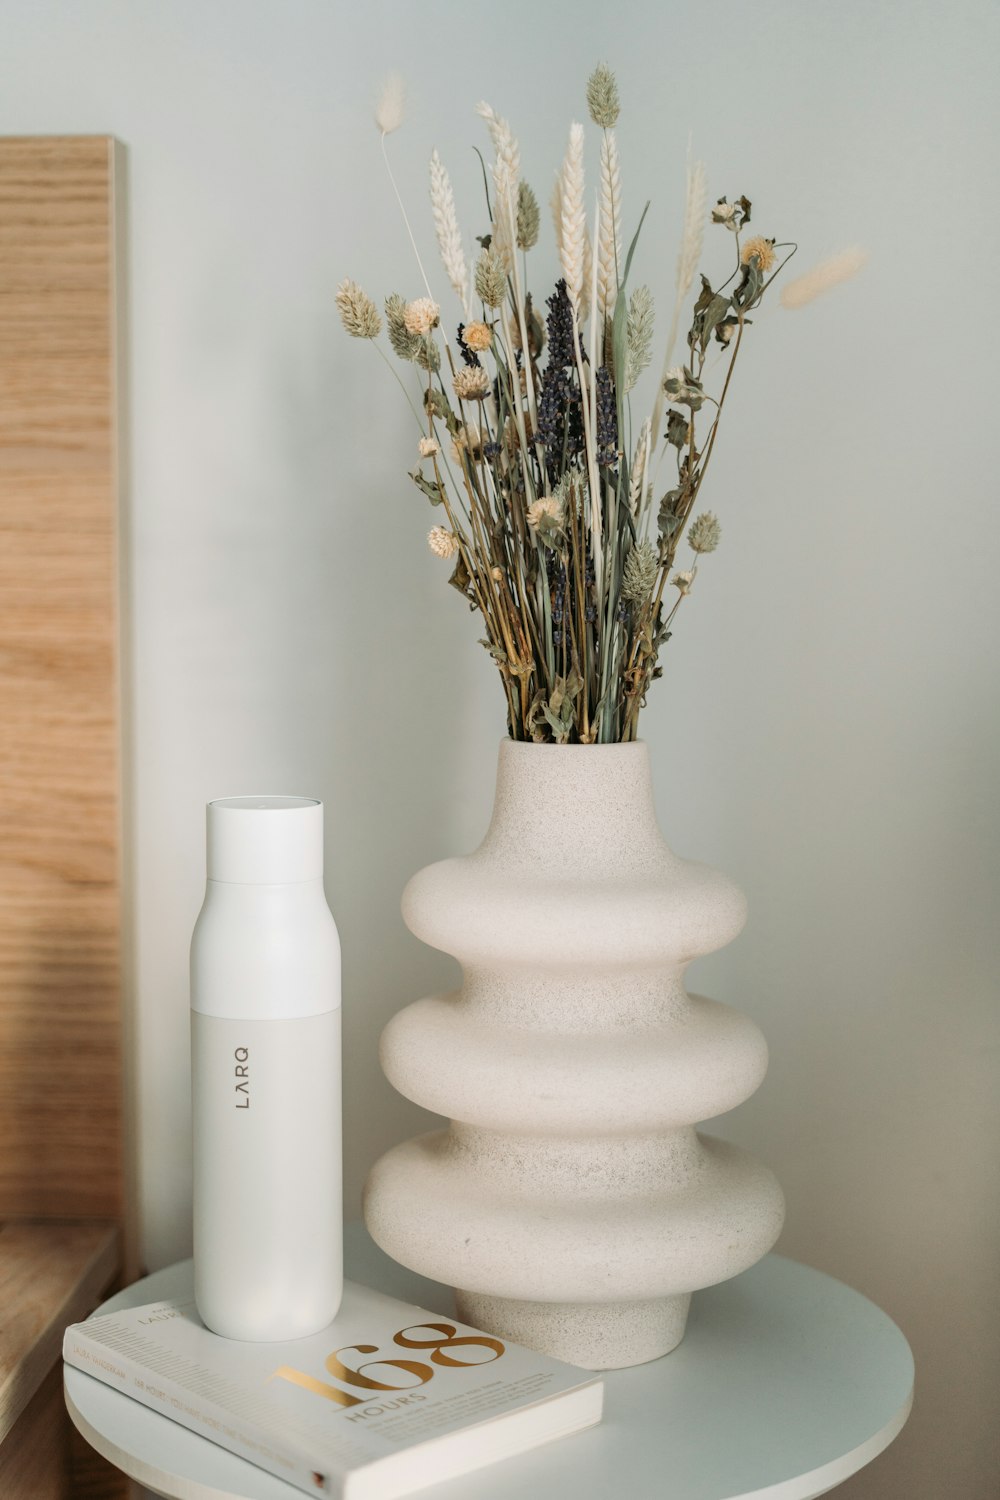 white ceramic vase with flowers